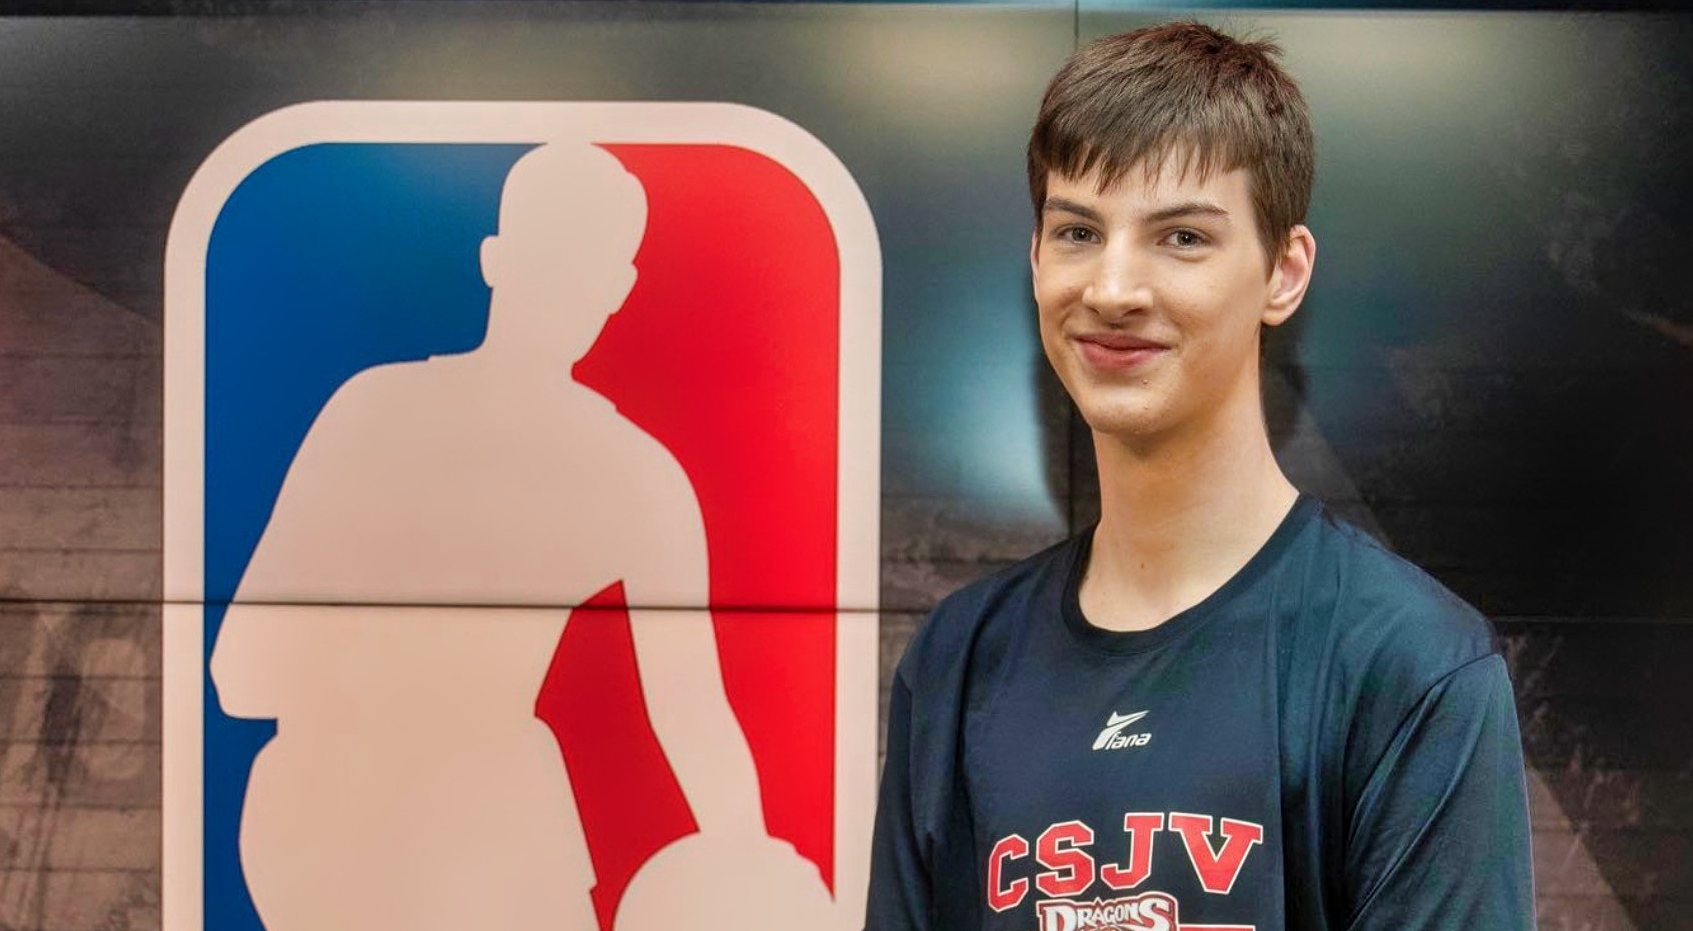 The Tallest Teen on Earth: Montreal basketball prospect Olivier